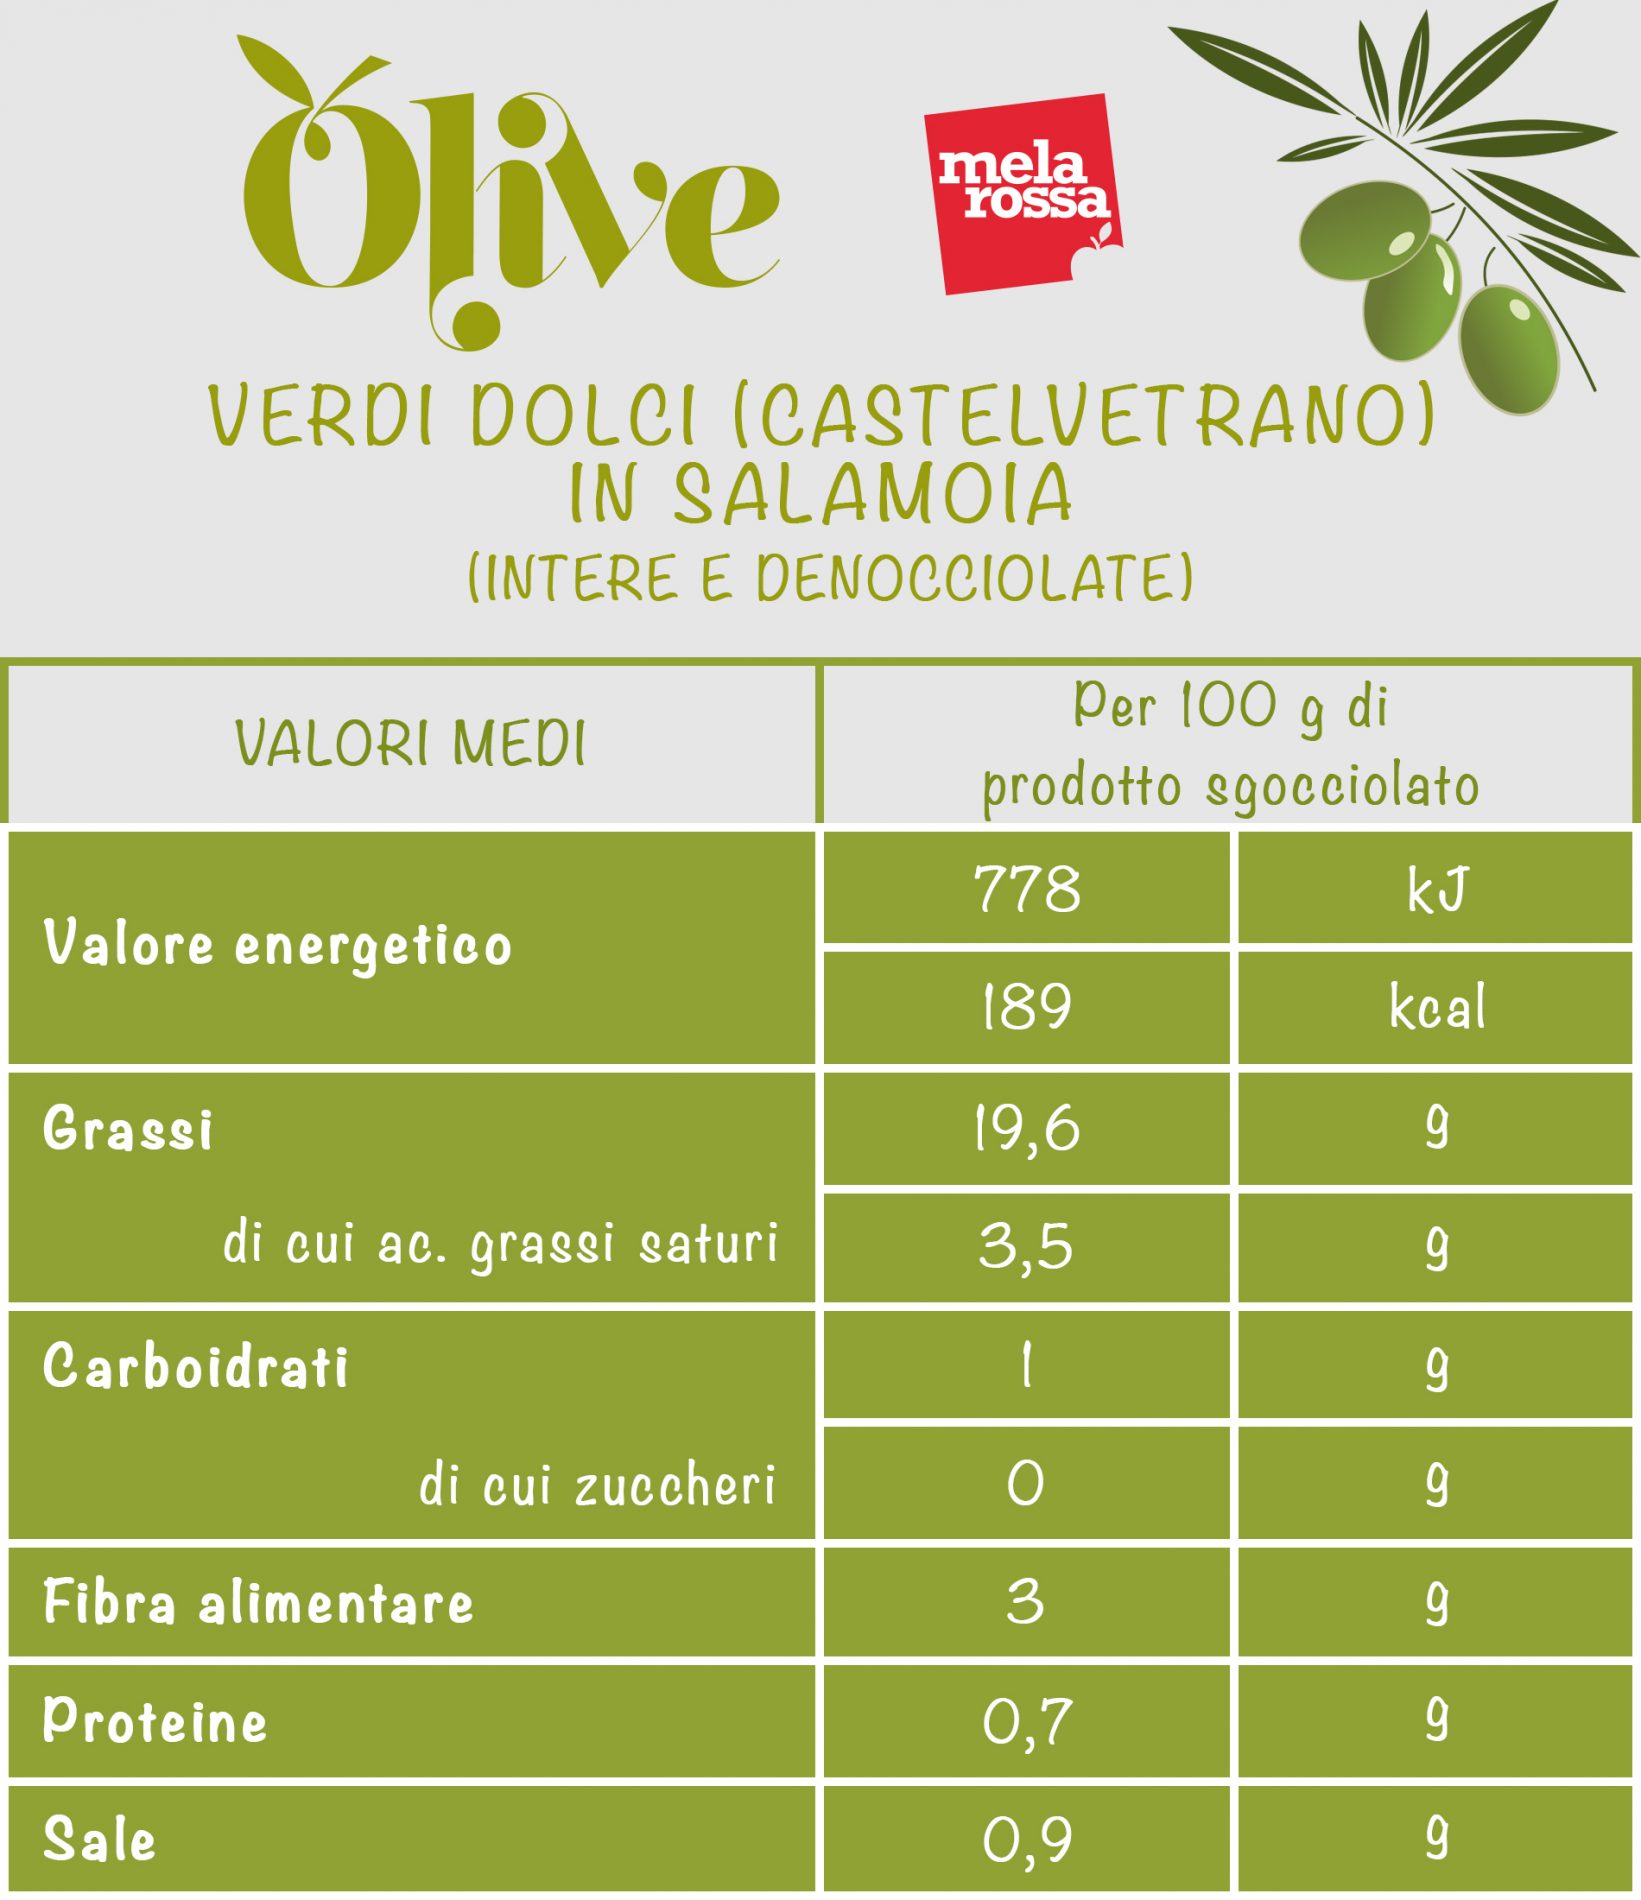 olive verdi dolci: calorie e valori nutrizionali